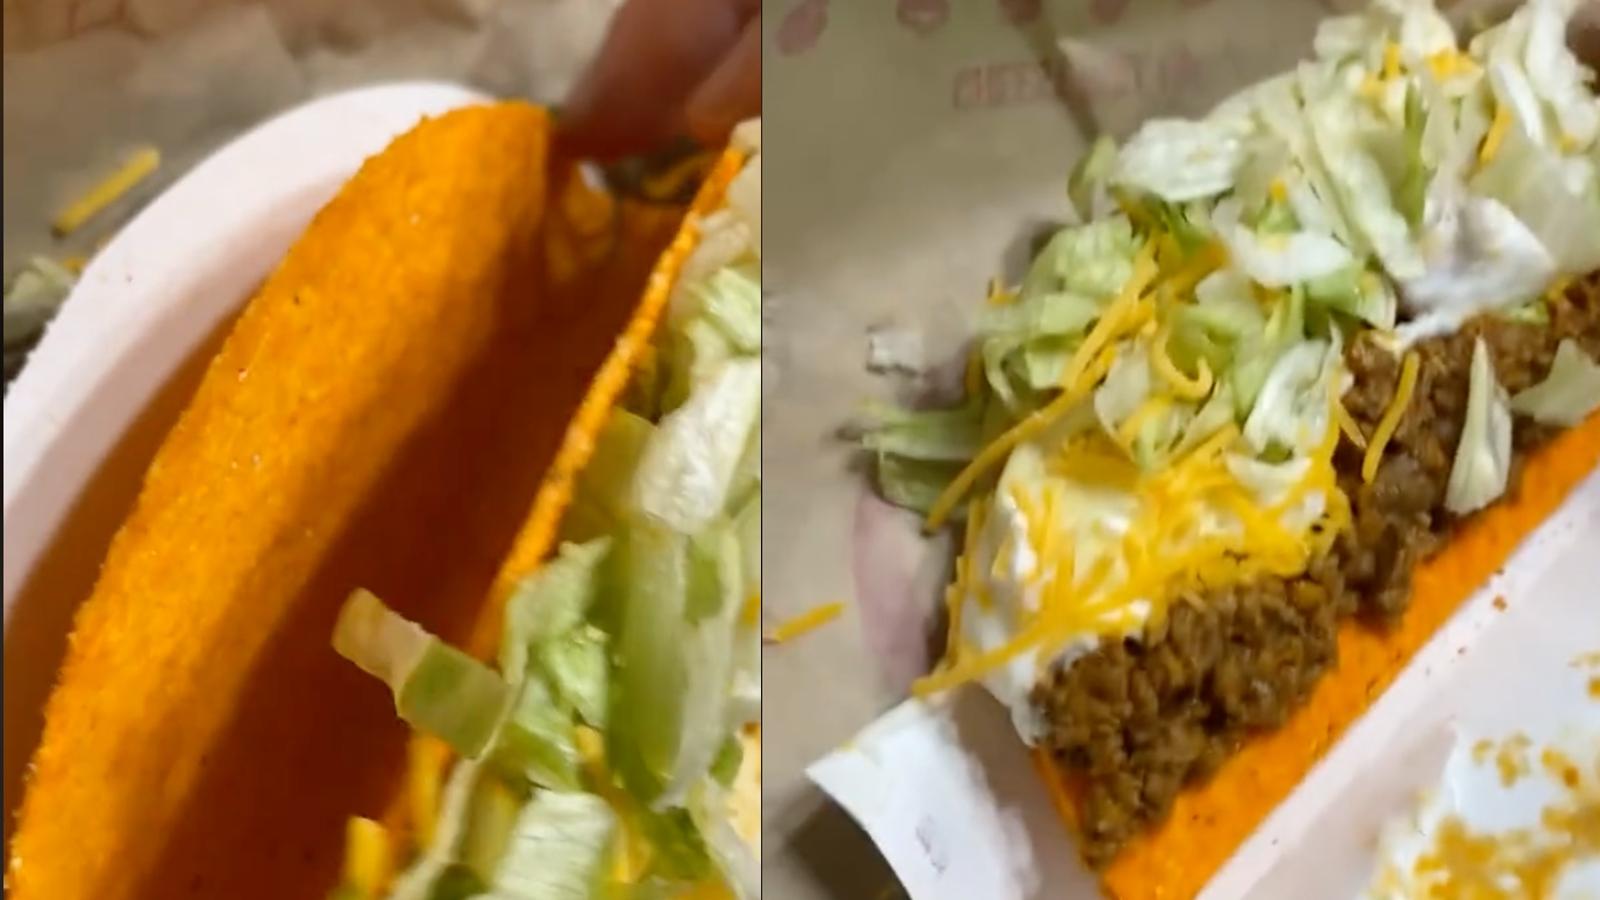 Man's viral Taco Bell order